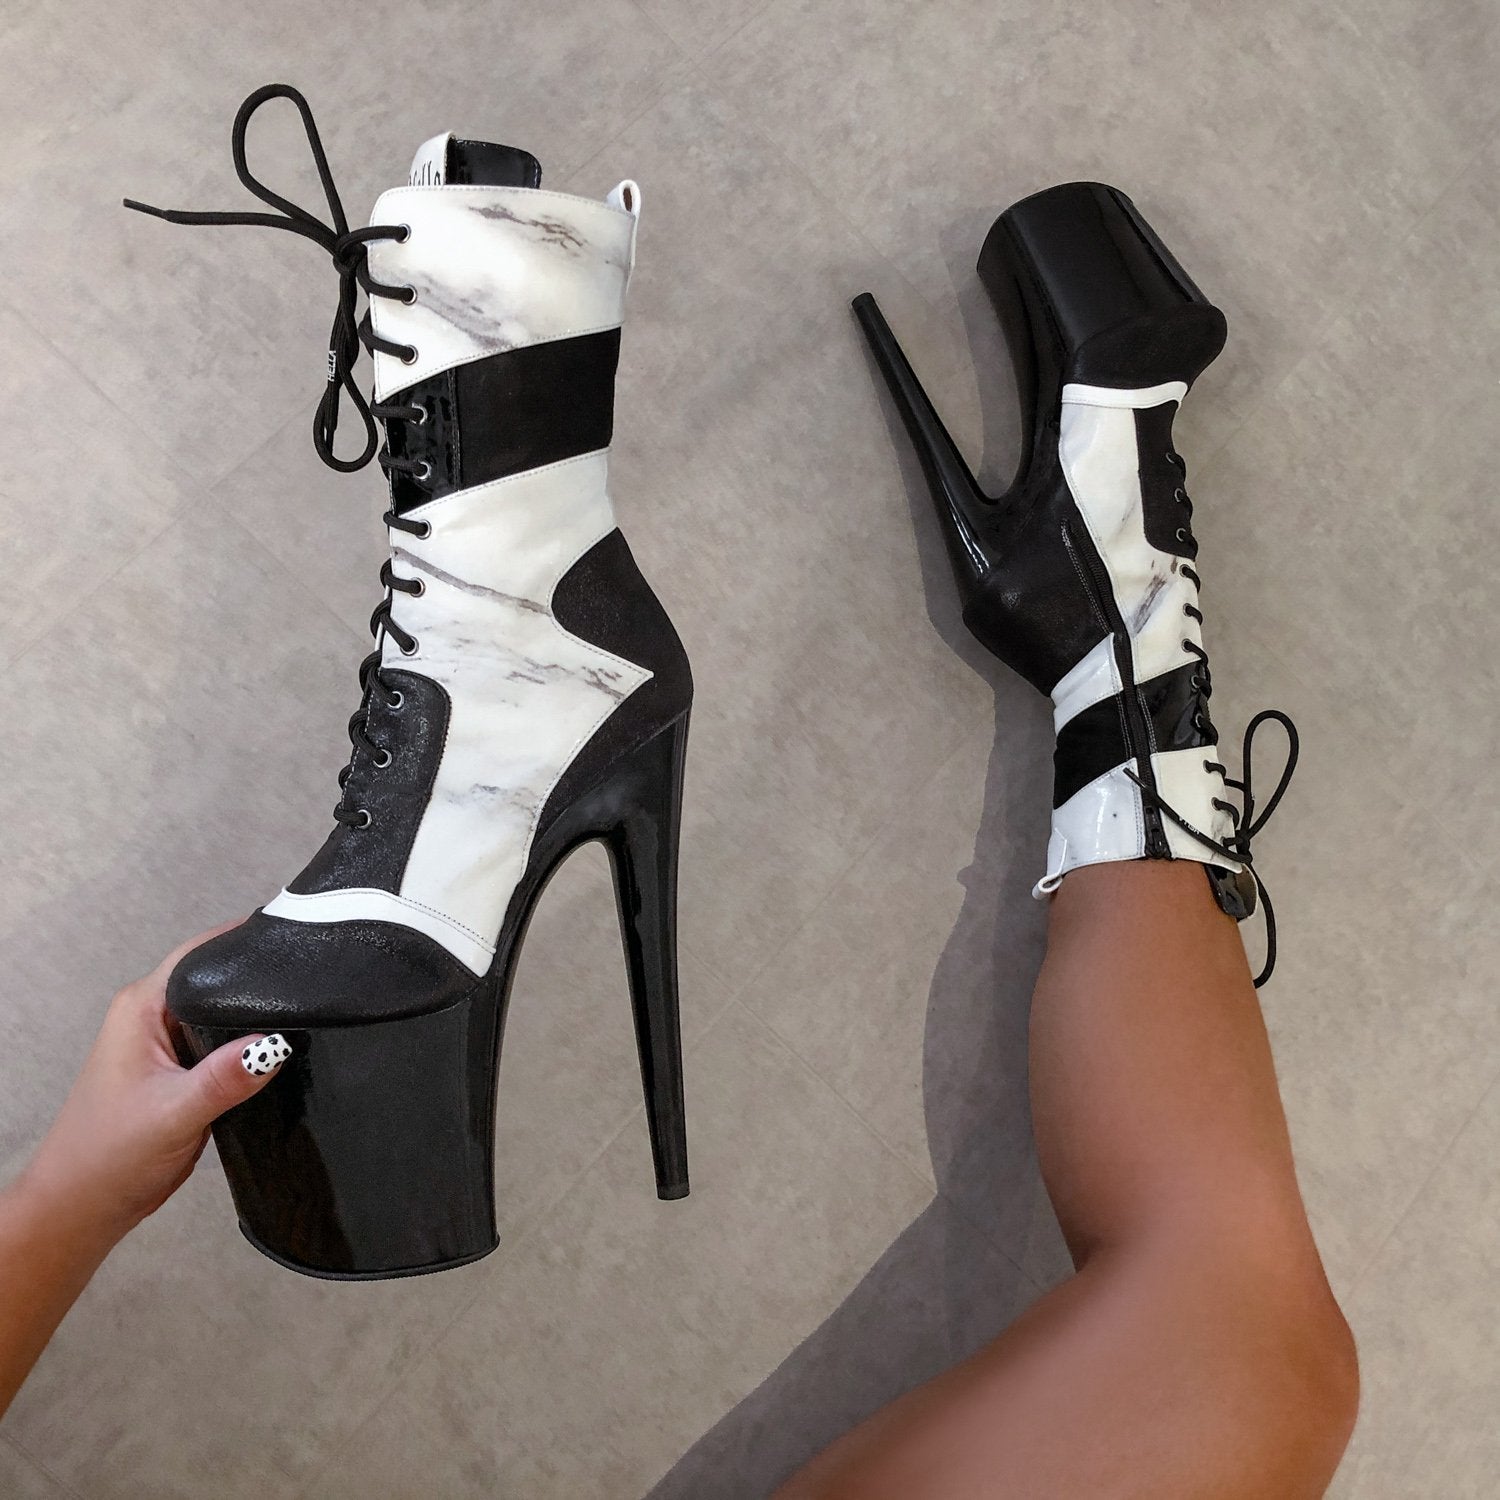 Empire Kicks Sneaker White Marble - 8 INCH, stripper shoe, stripper heel, pole heel, not a pleaser, platform, dancer, pole dance, floor work